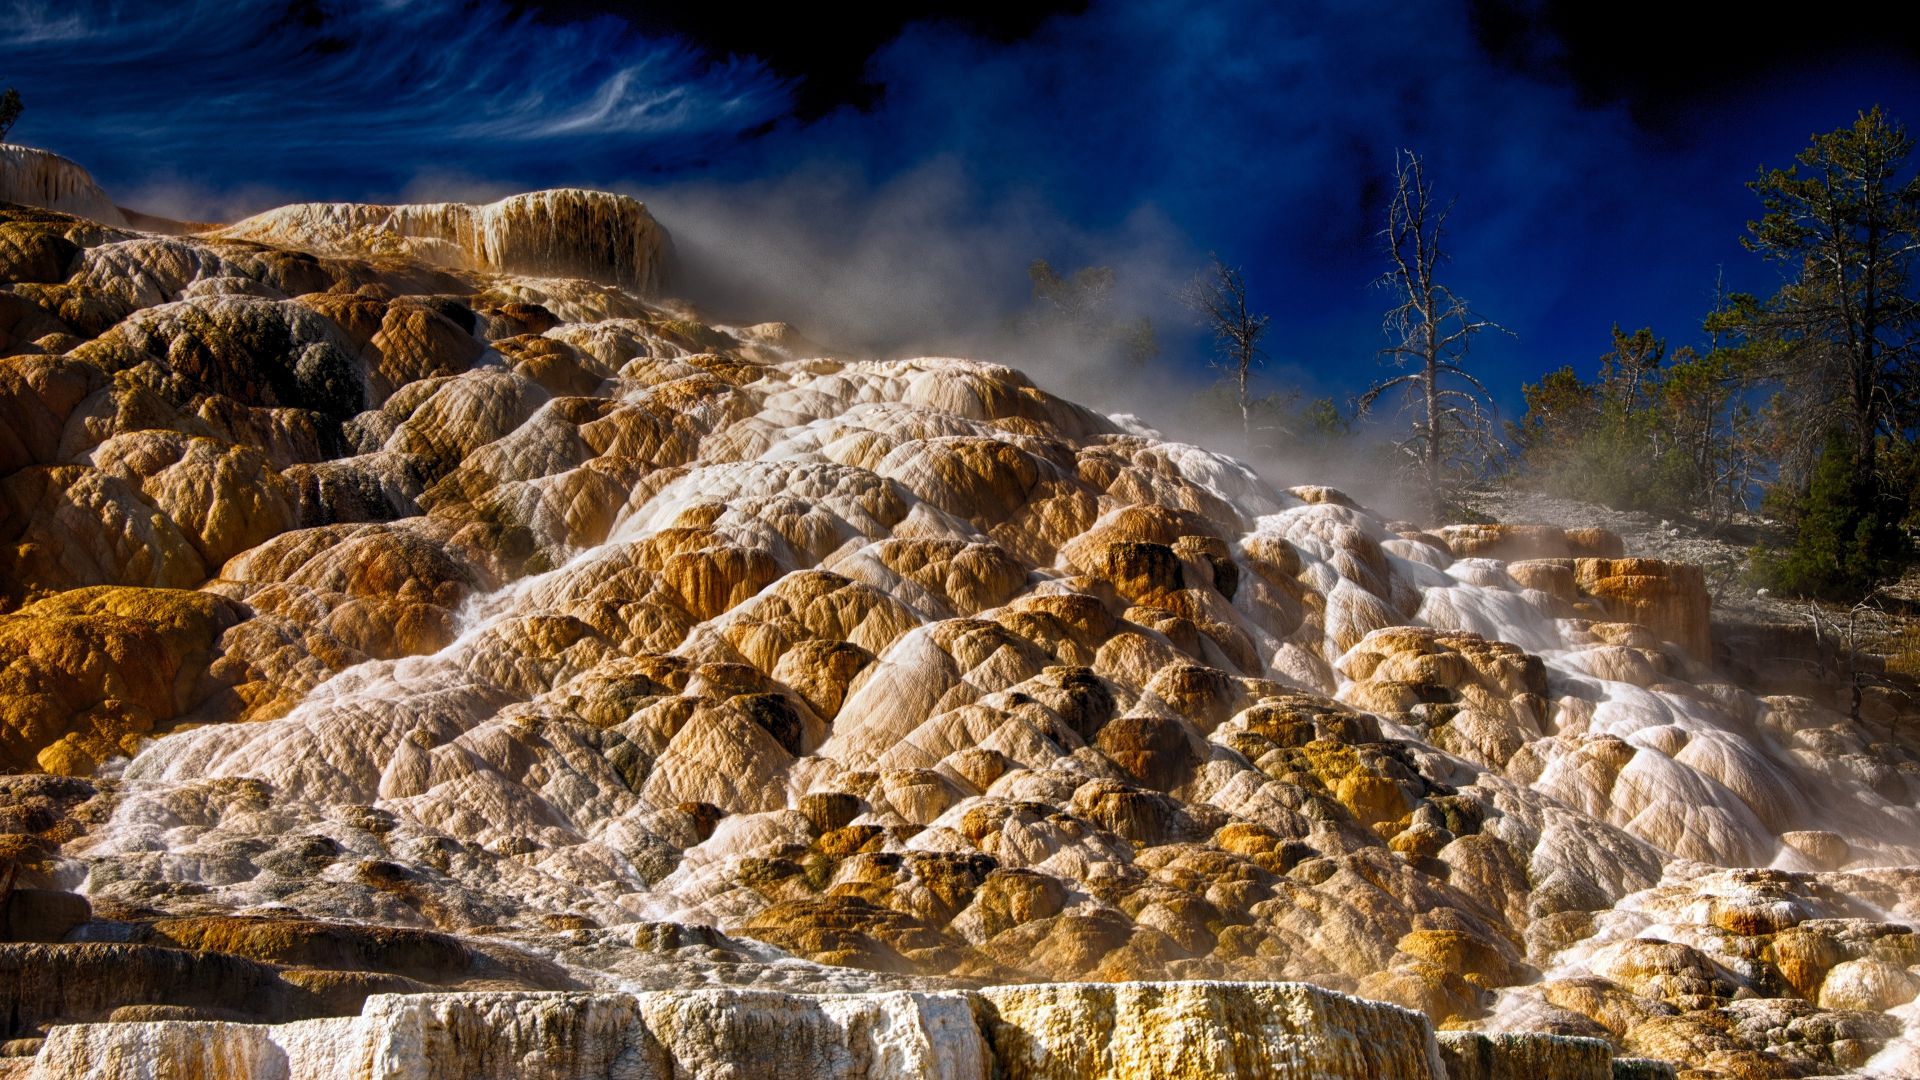 Мамонтовы горячие источники, 4k, HD, Йеллоустоун, Дакота, Mammoth hot springs, 4k, HD wallpaper, Yellowstone, National Park, Dakota (horizontal)